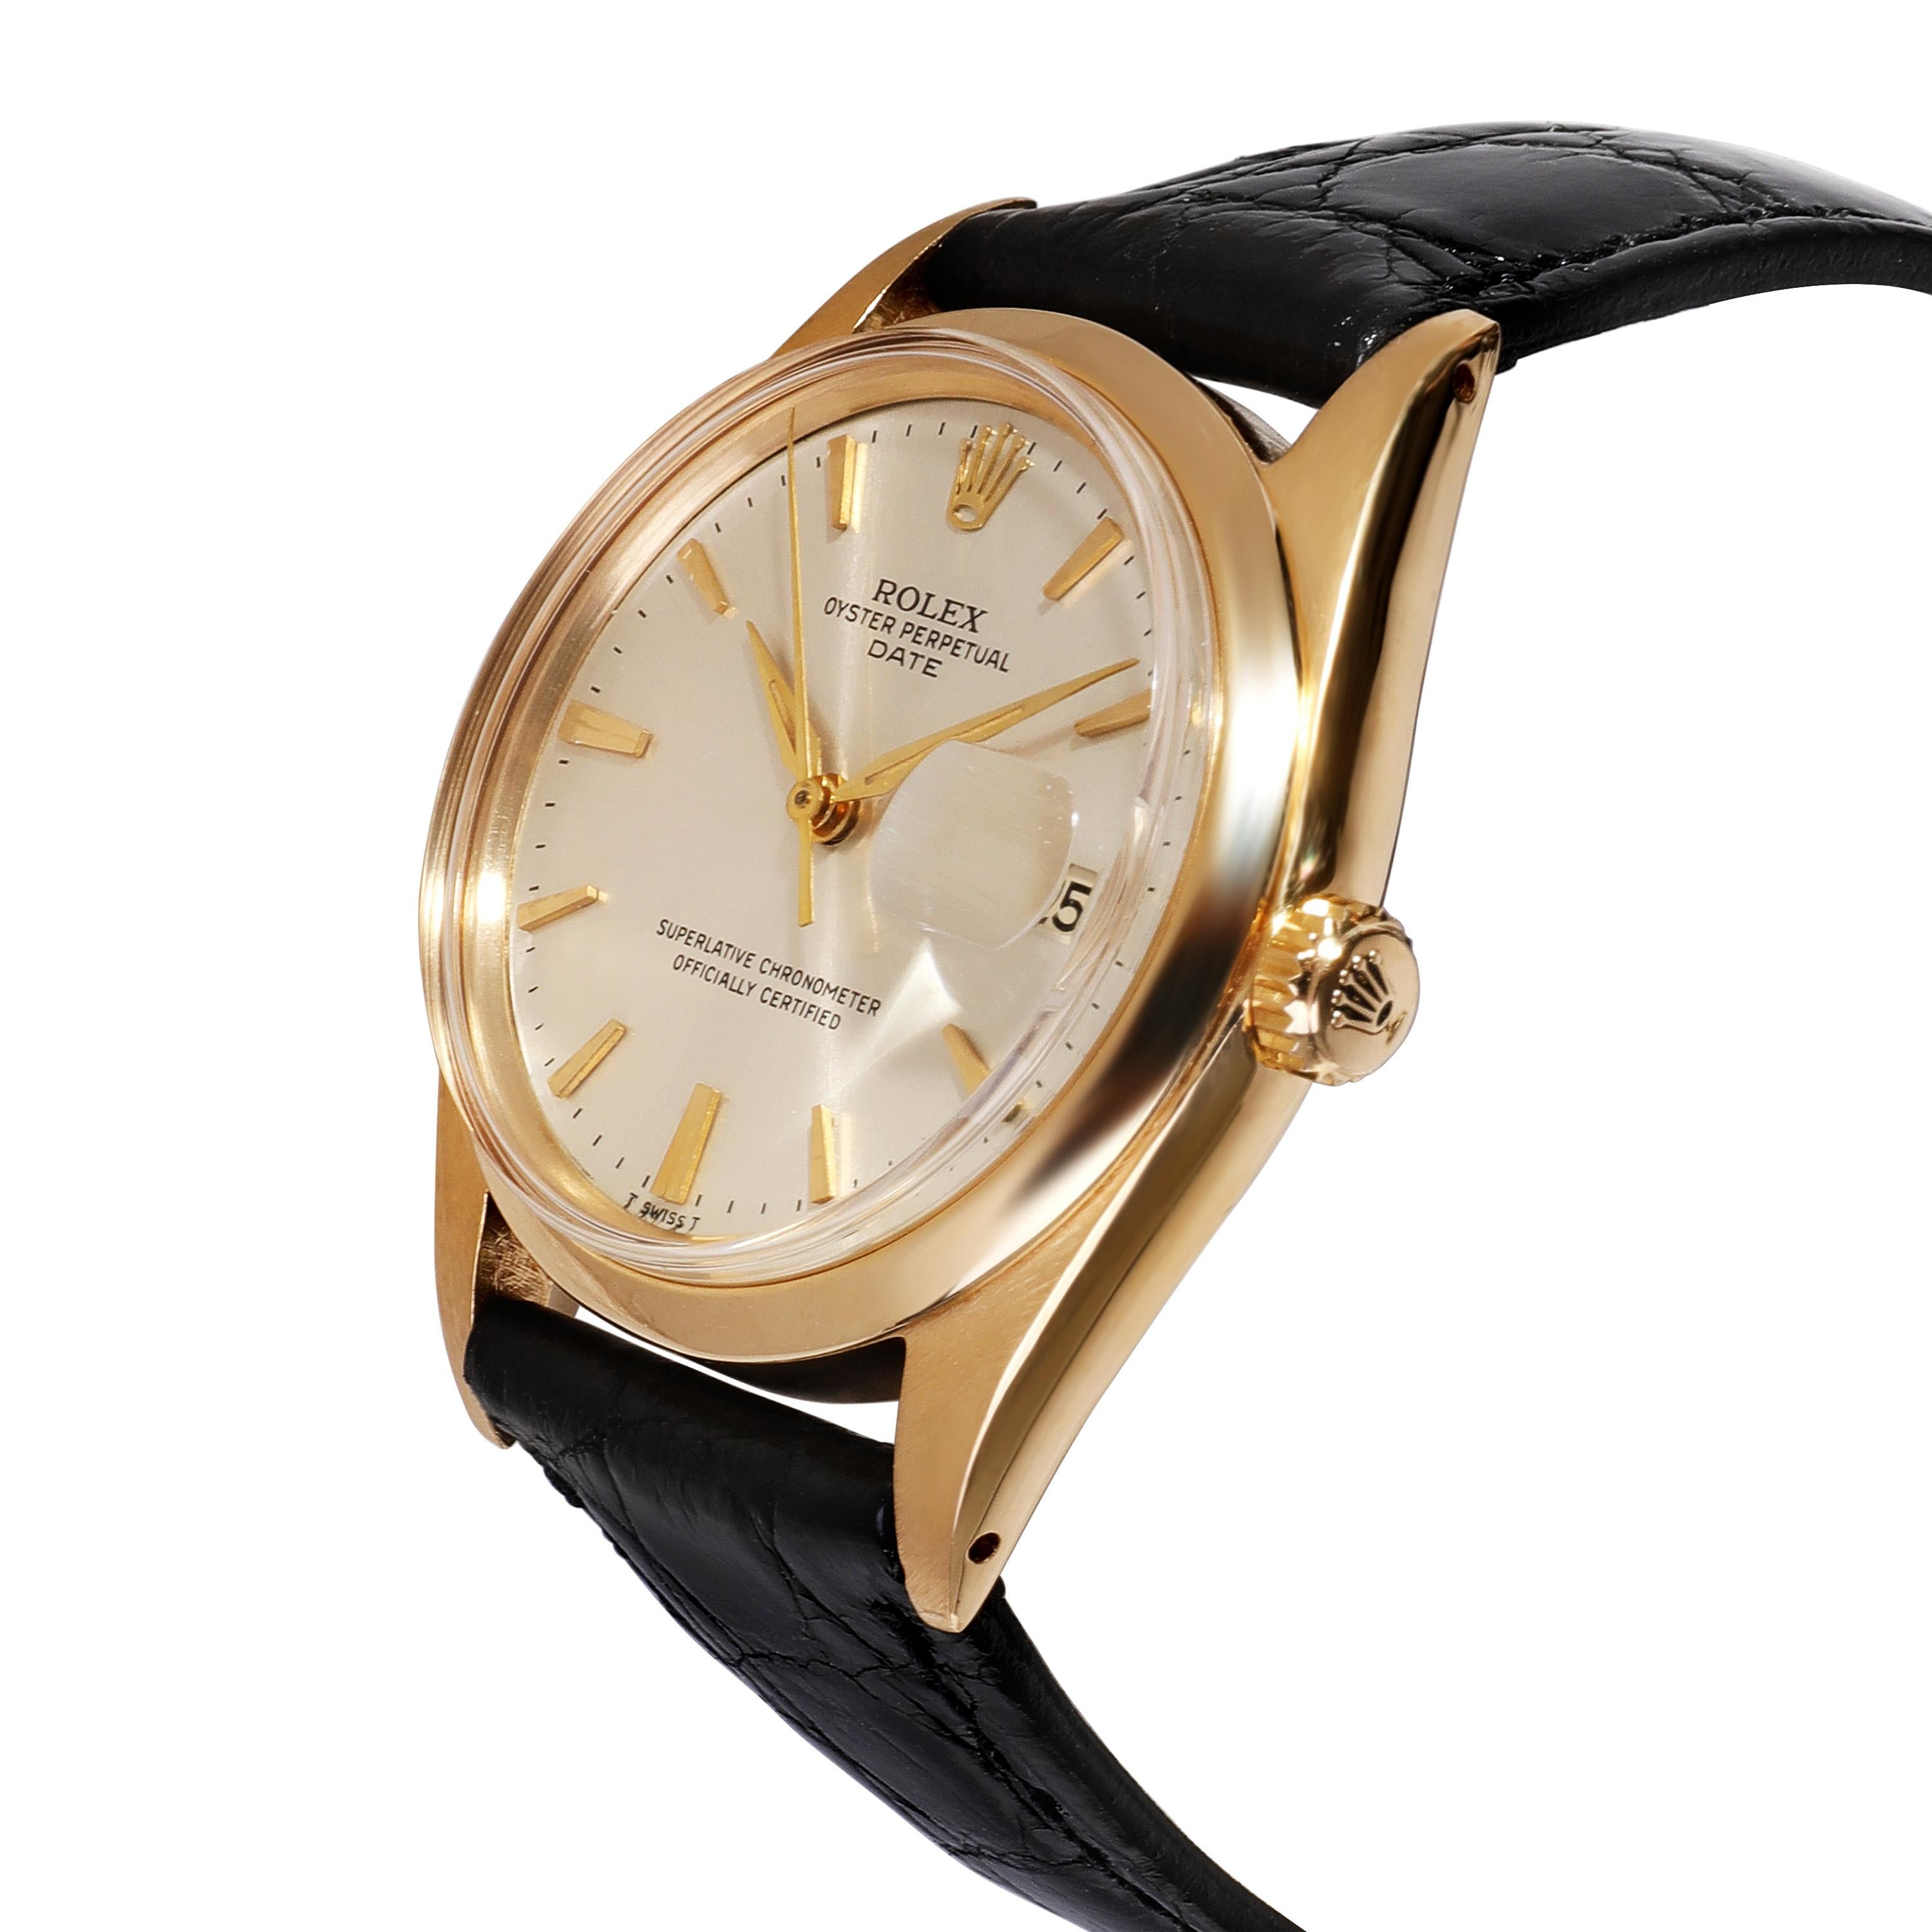 Rolex Date 1500 Men's Watch in 18kt Yellow Gold 1